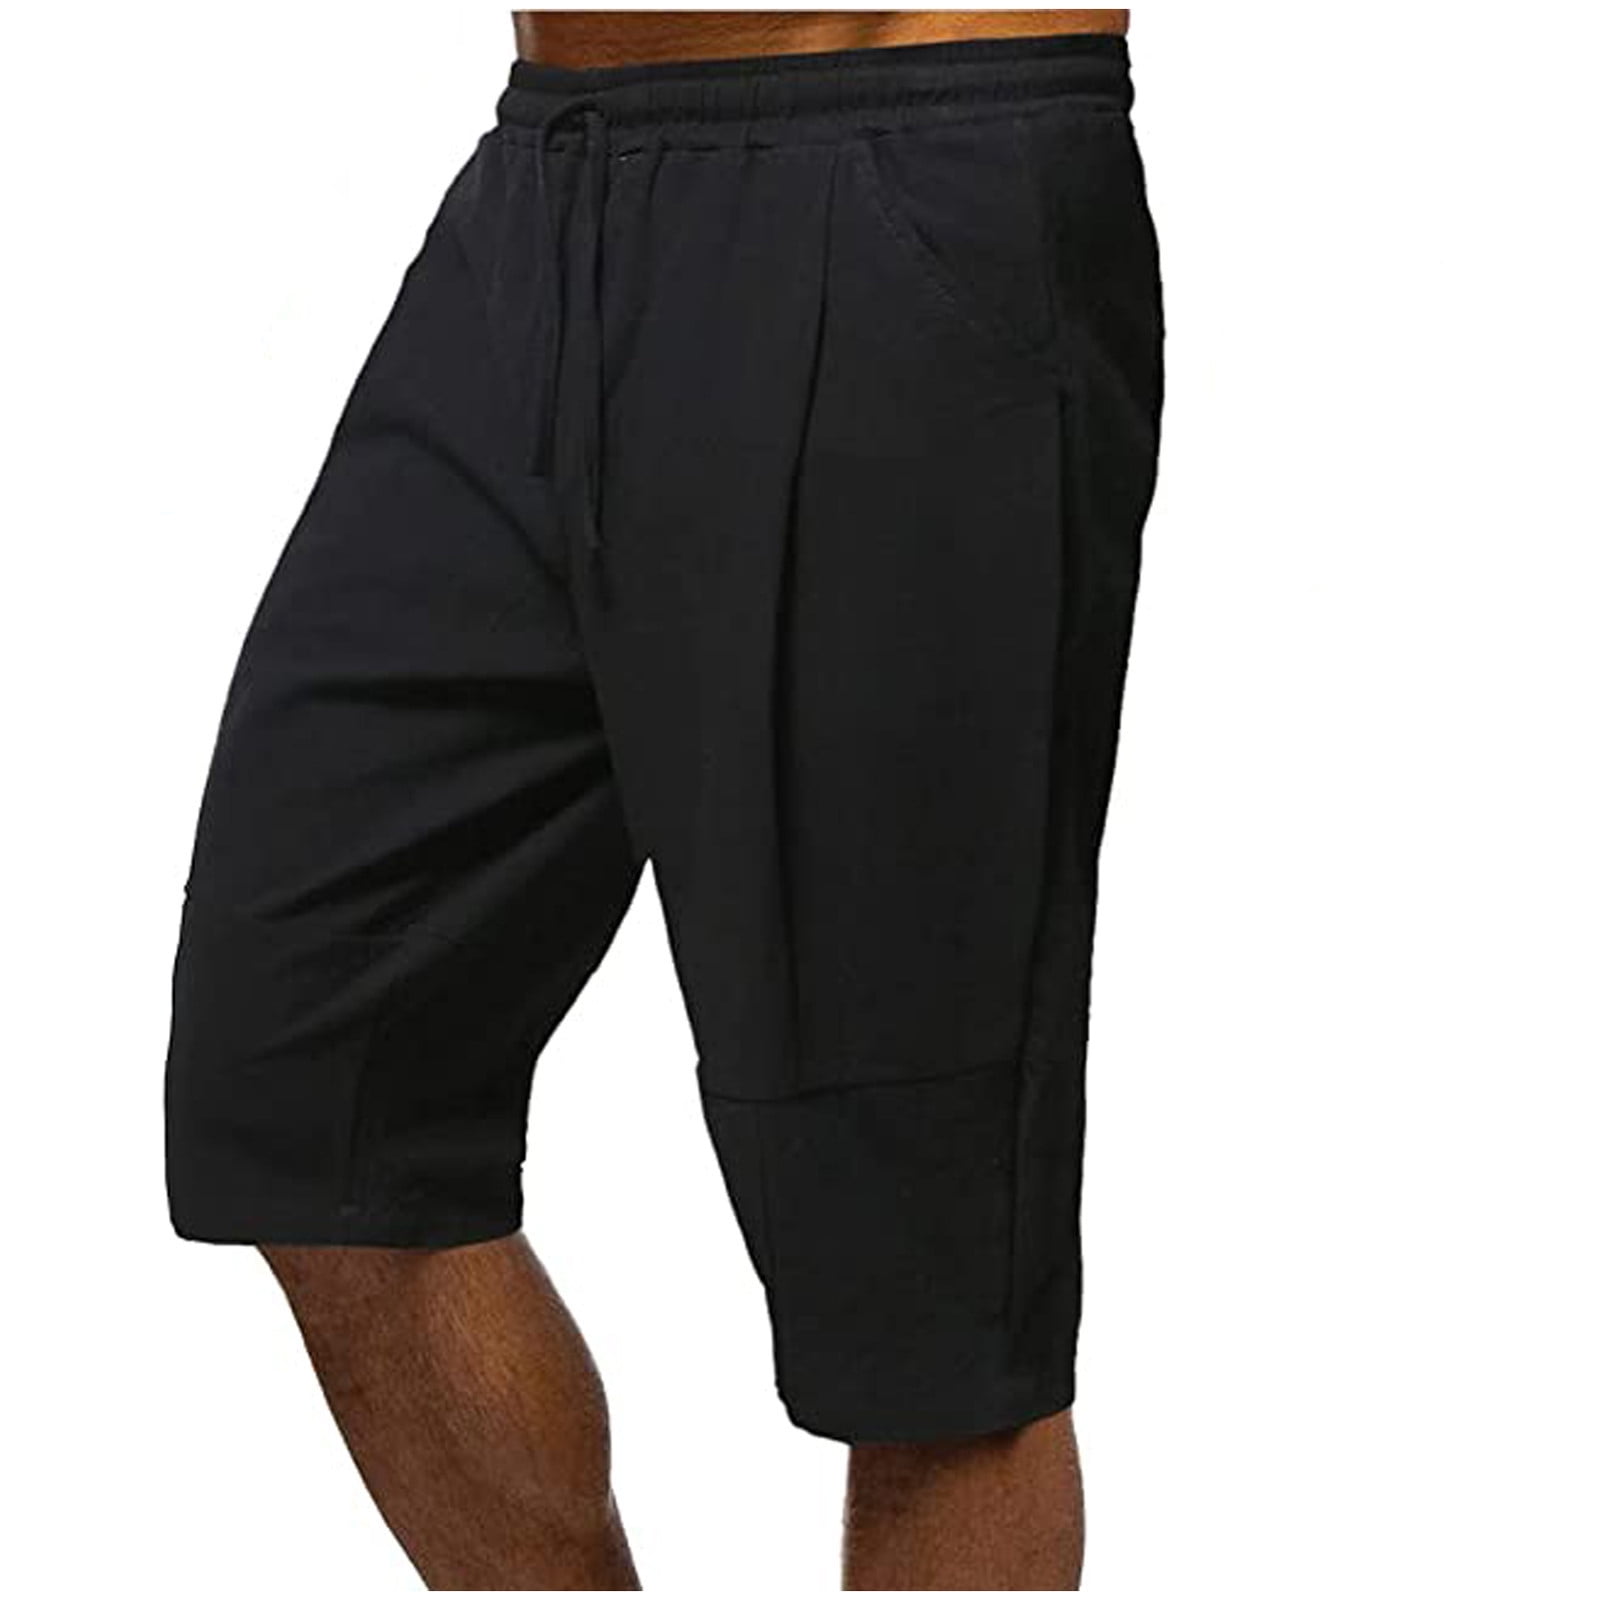 amelAEA Men's Cotton Linen Shorts Casual Elastic Waist Drawstring ...